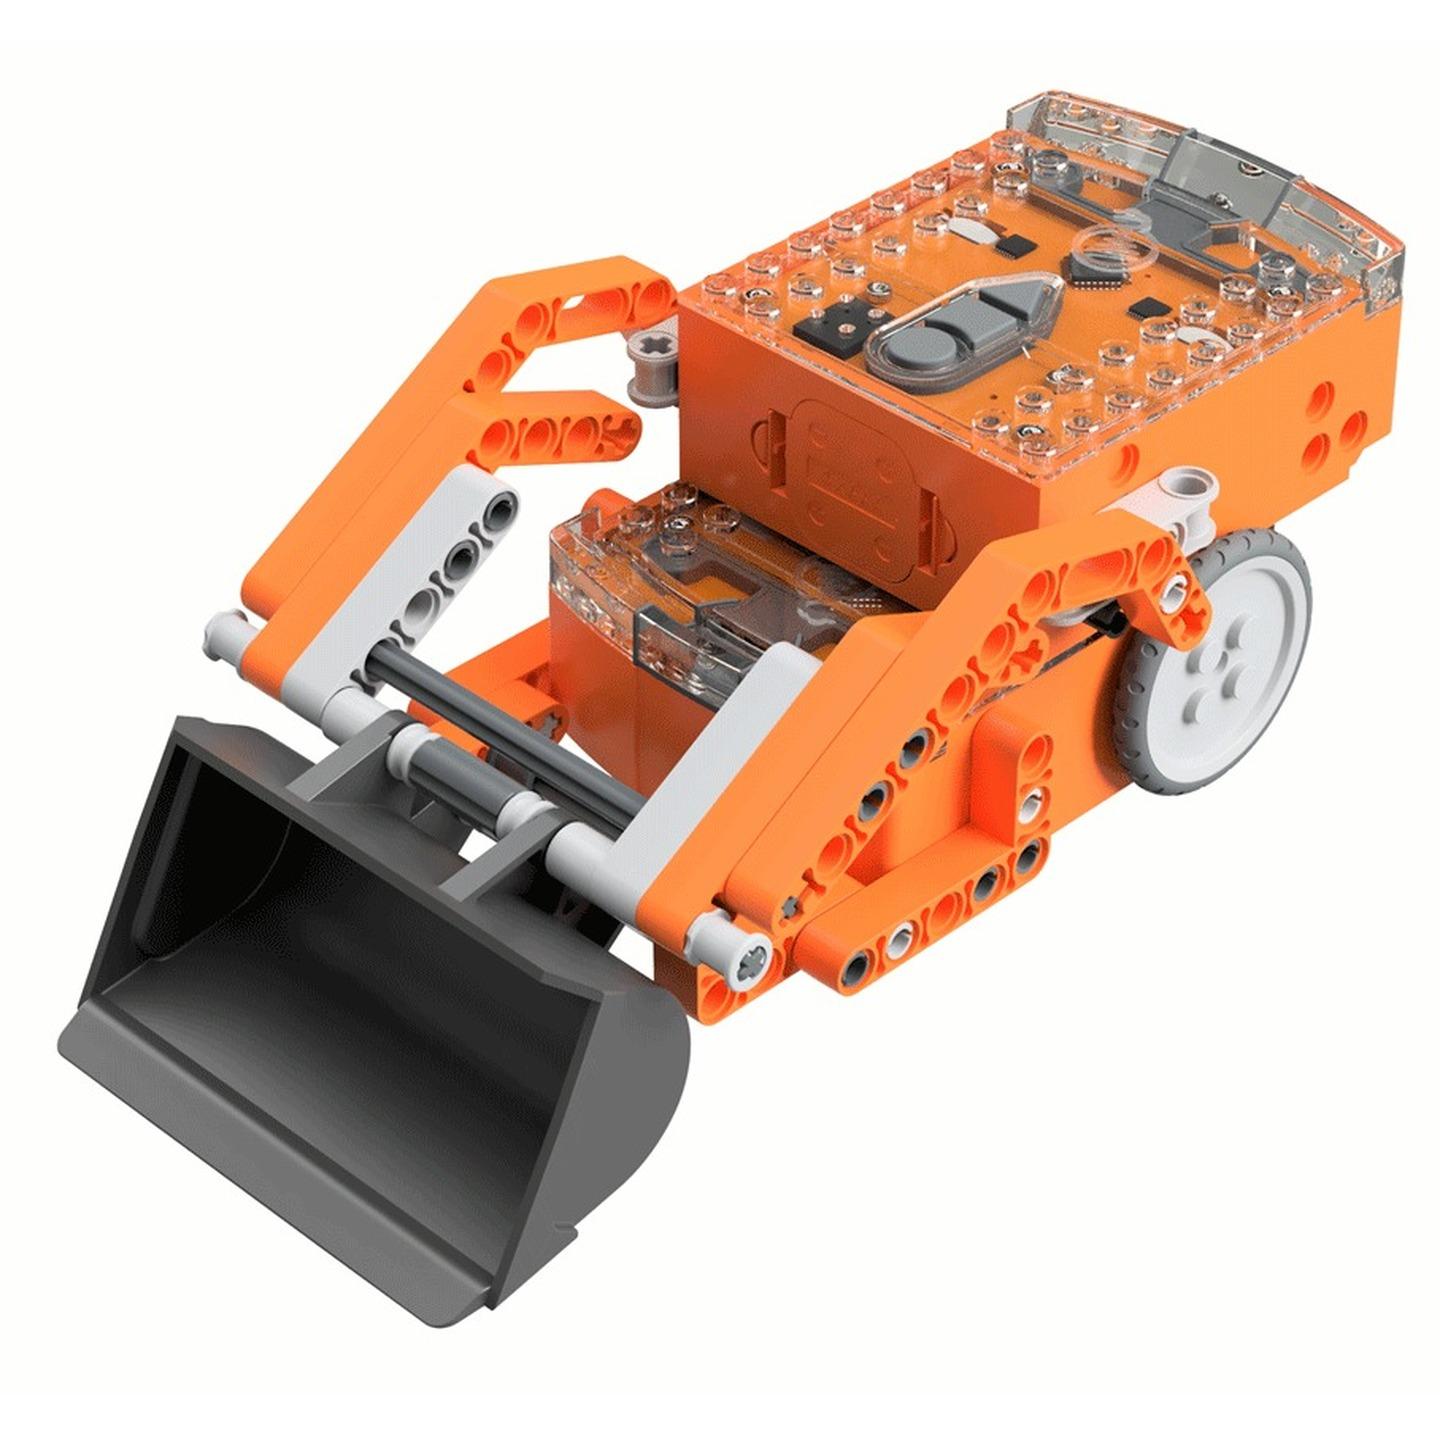 EdCreate - Edison robot creator kit